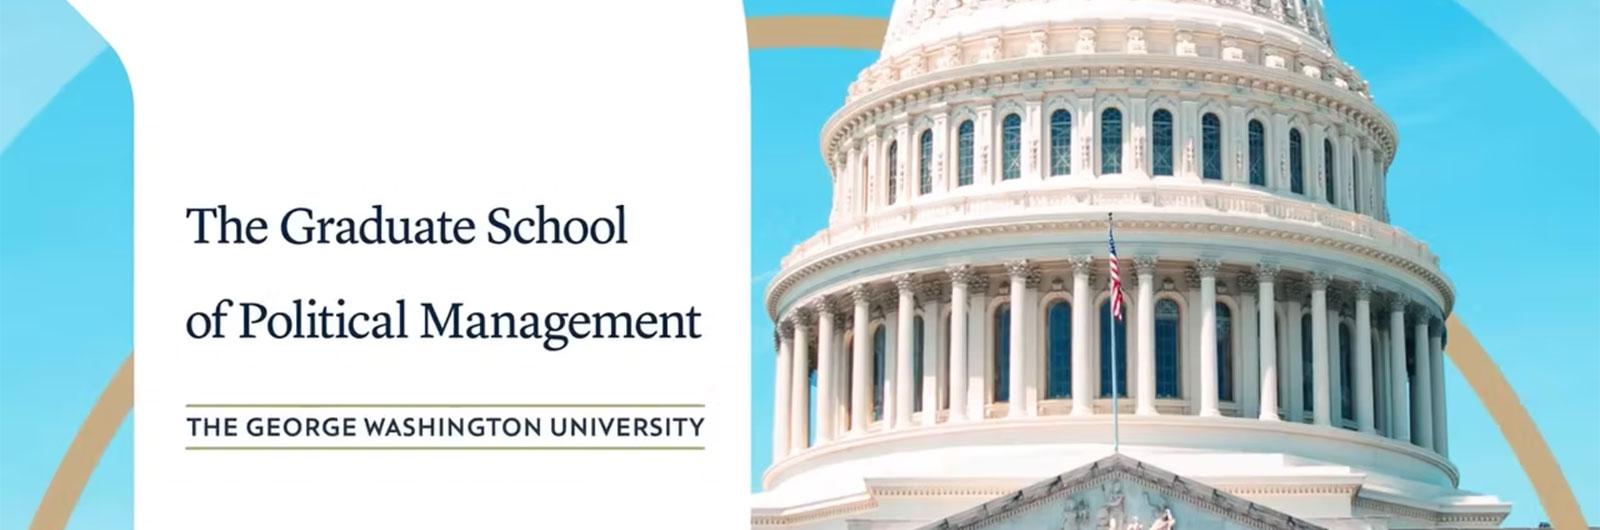 The Graduate School of Political Management logo, U.S. Capitol Building